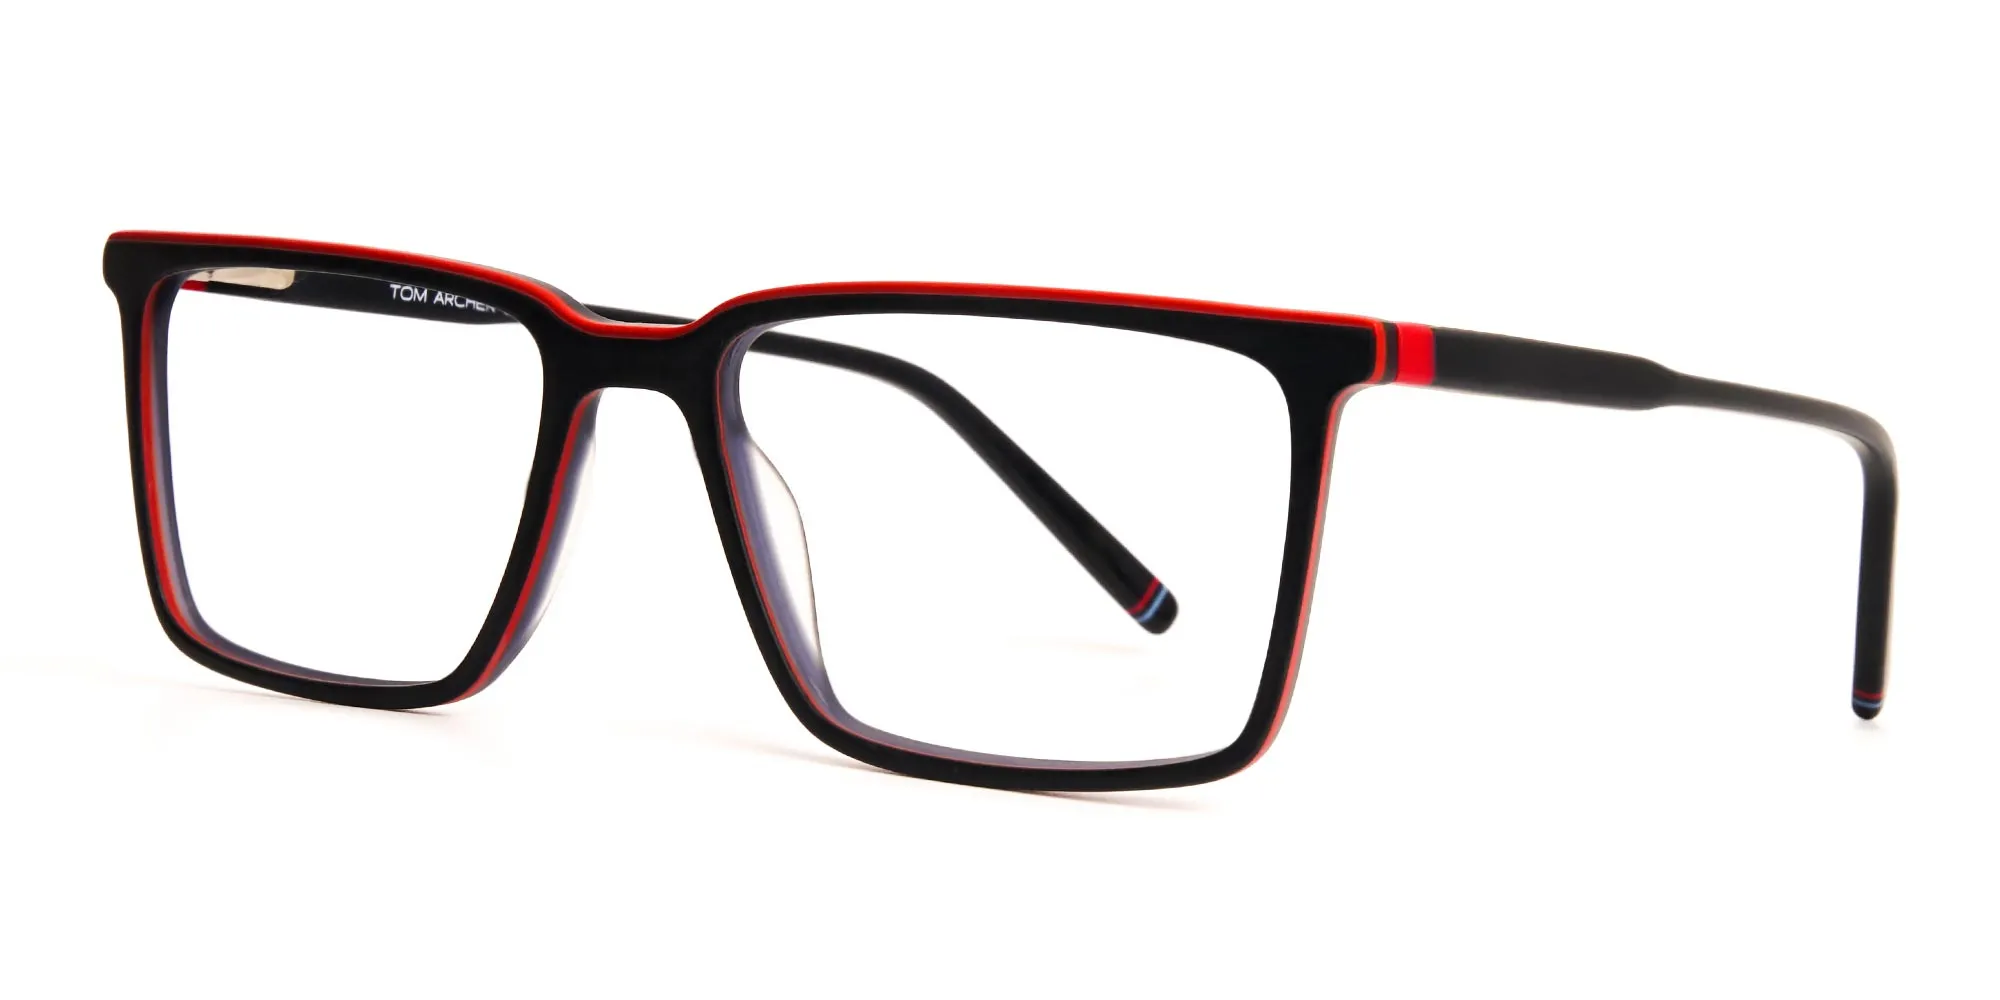 Dark-rimmed glasses are prescription for 'geek chic